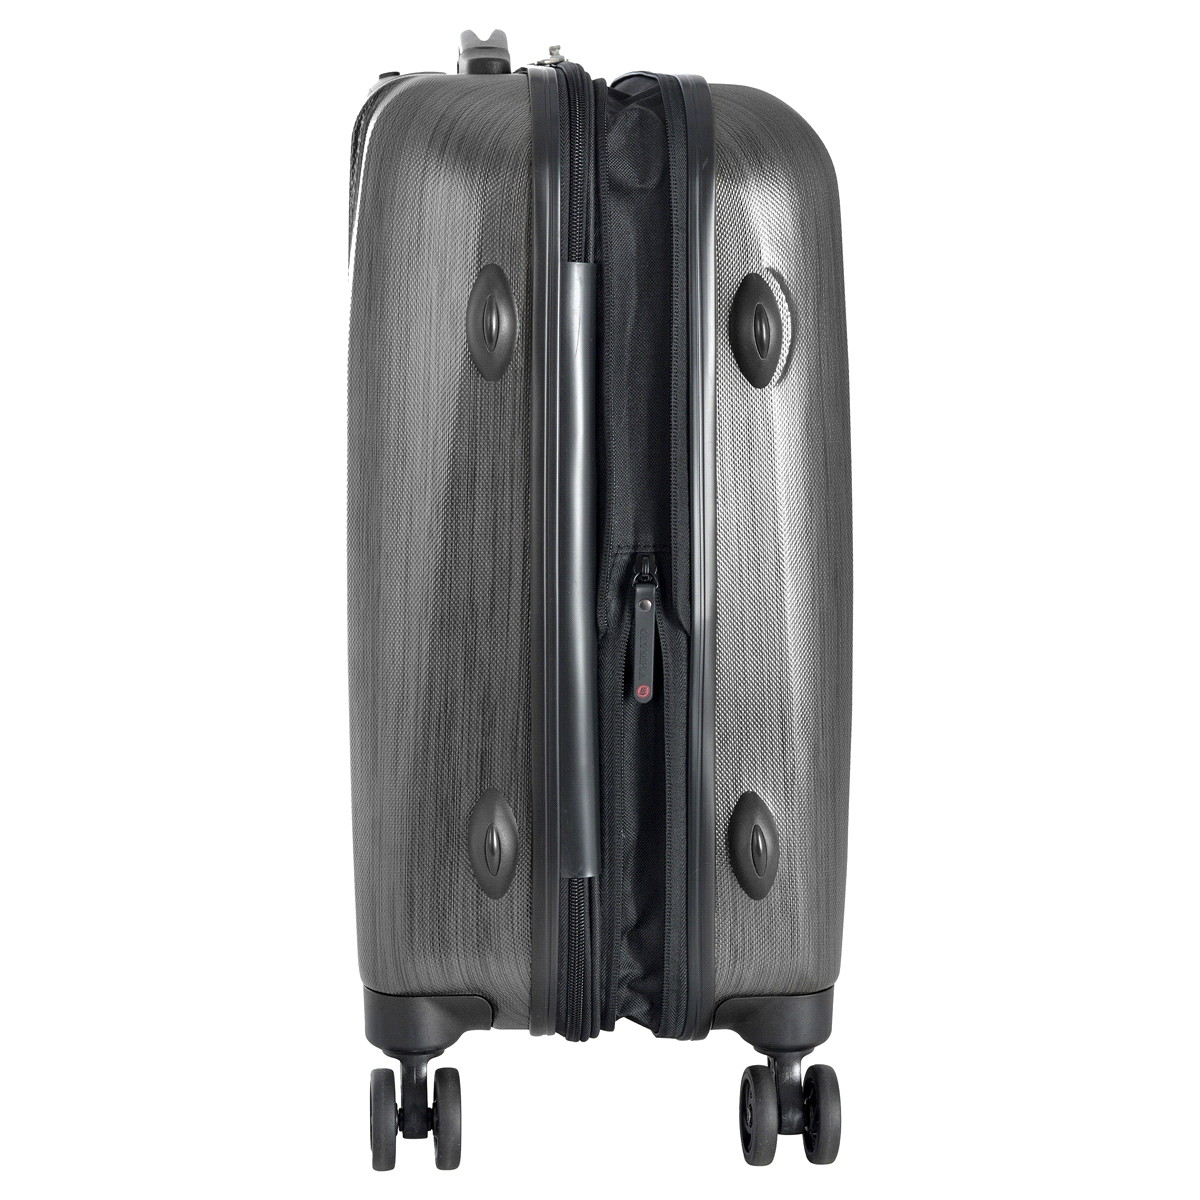 Olympia Aerolite 29 Large-size Spinner Luggage Gray